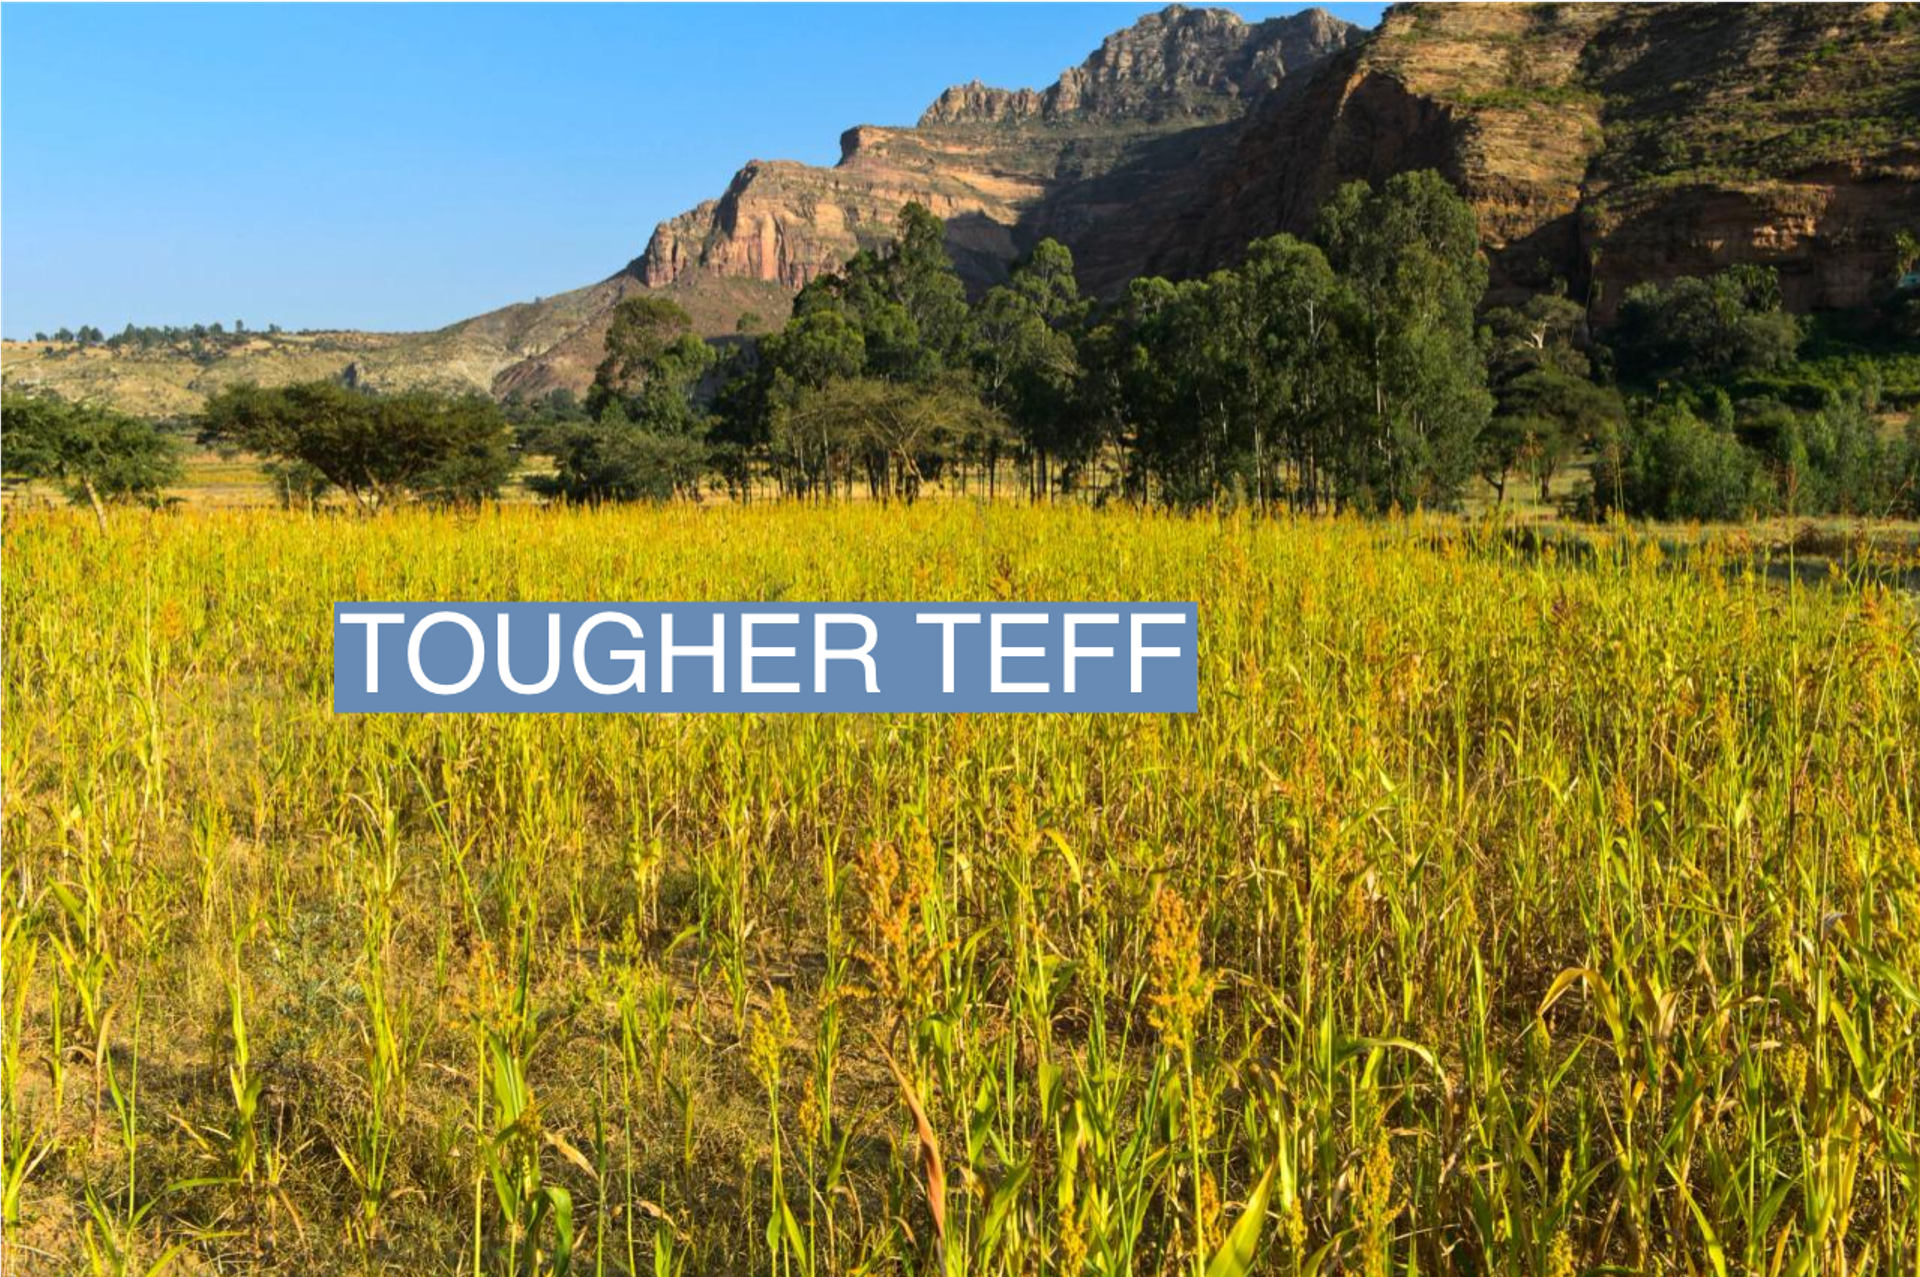 A field of teff grows on the Hazwien Plain in Ethiopia.